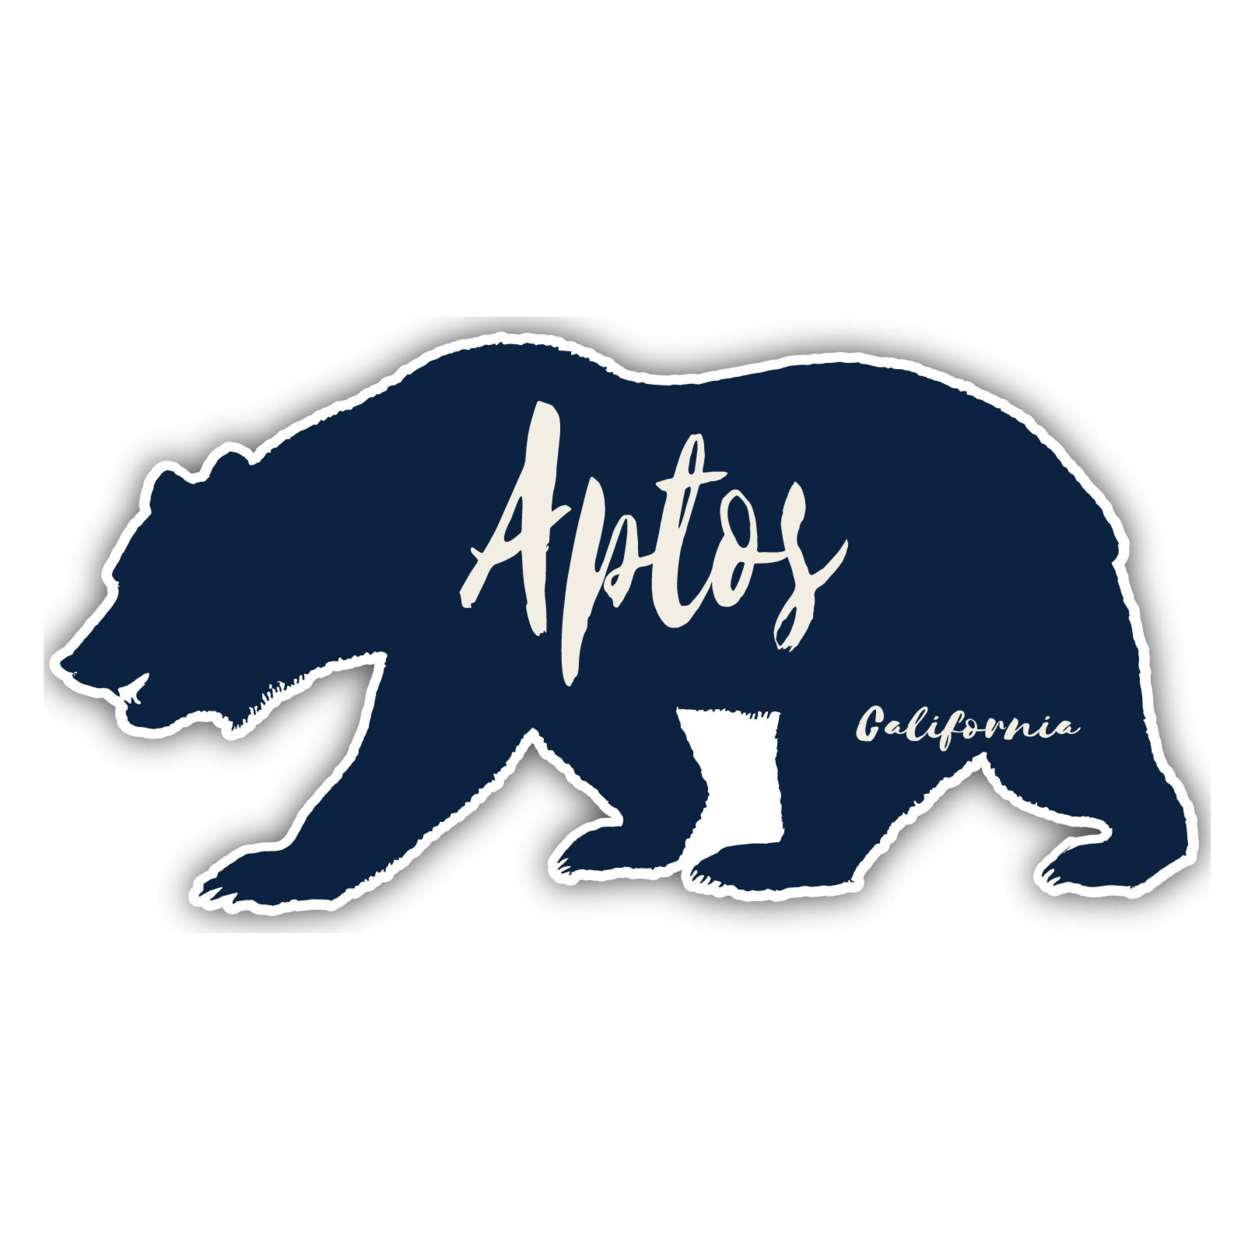 Aptos California Souvenir Decorative Stickers (Choose Theme And Size) - 4-Pack, 2-Inch, Bear